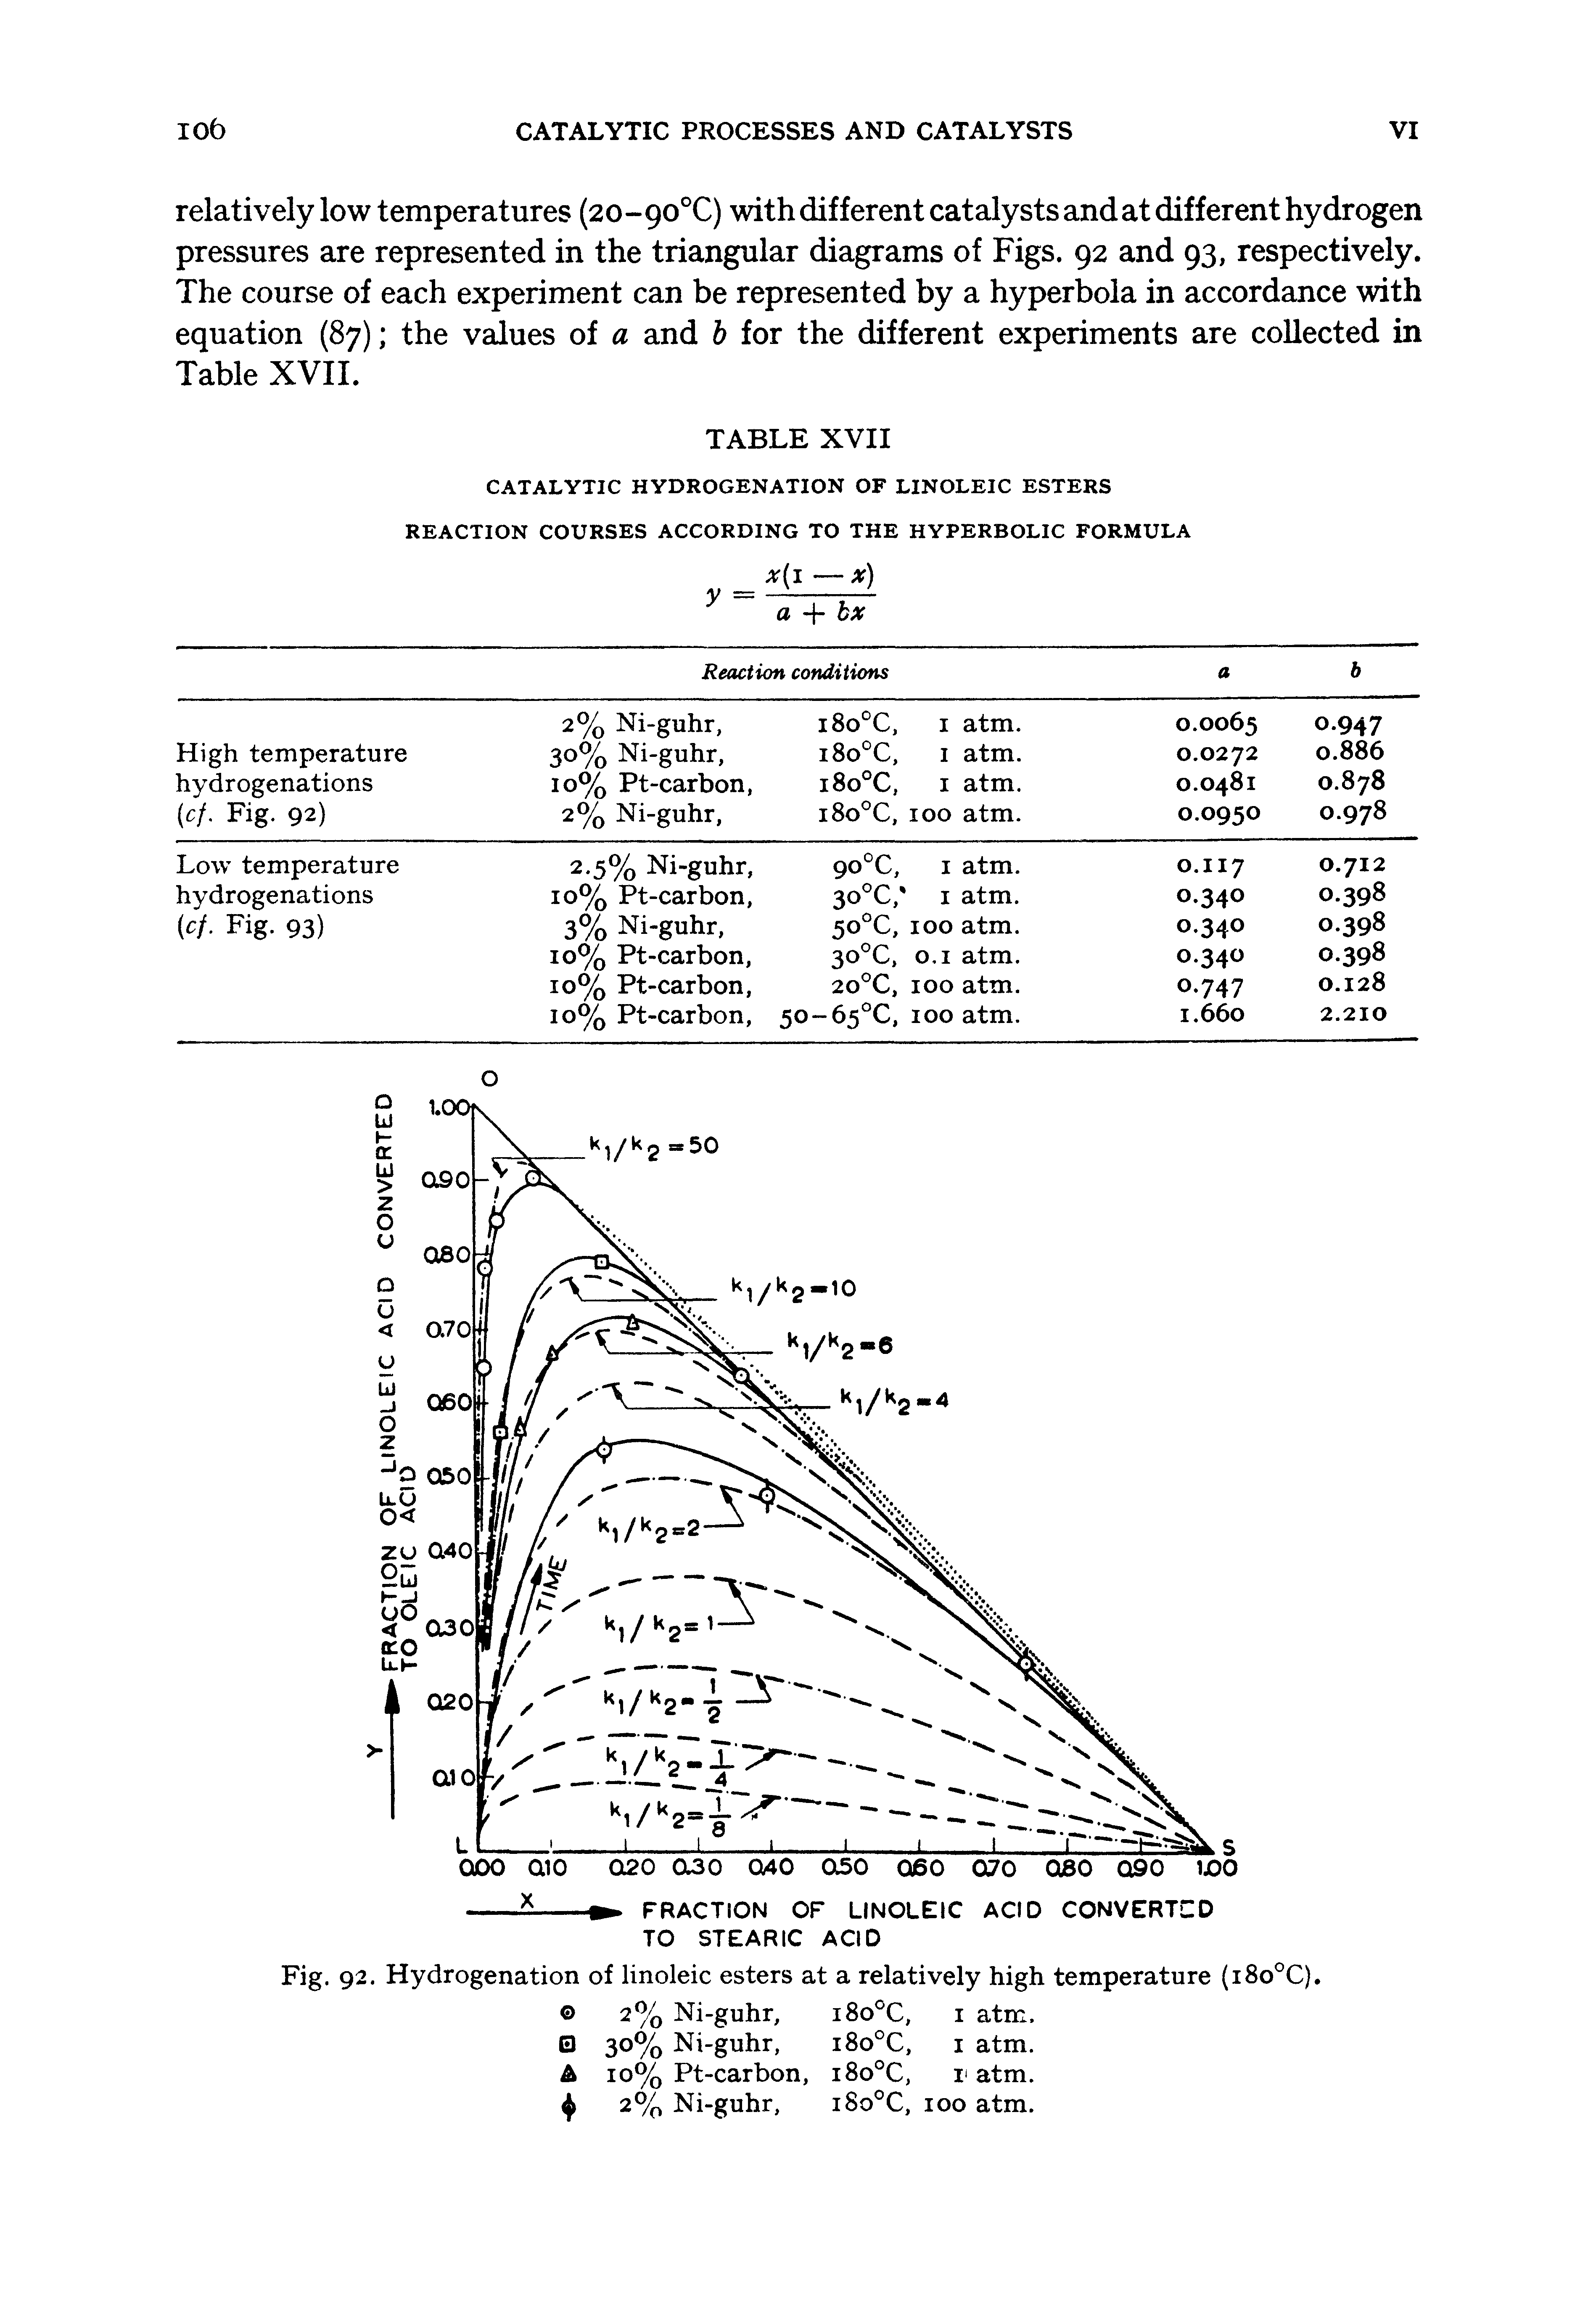 Fig. 92. Hydrogenation of linoleic esters at a relatively high temperature (i8o°C). 2% Ni-guhr, i8o°C, 1 atm.